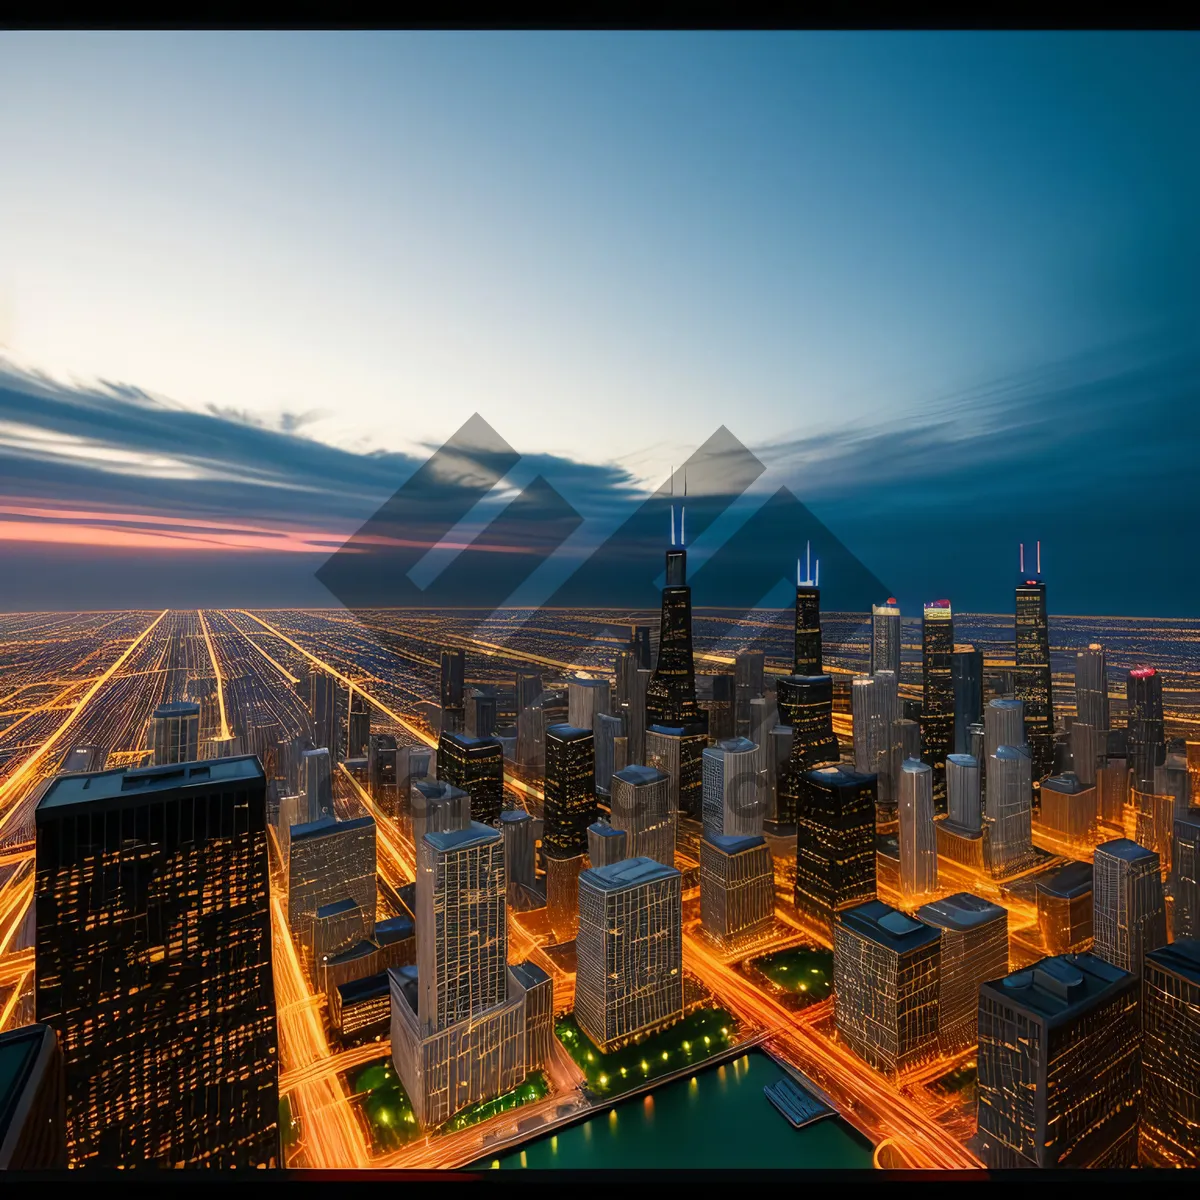 Picture of Night Skyline Illuminating Urban Business District